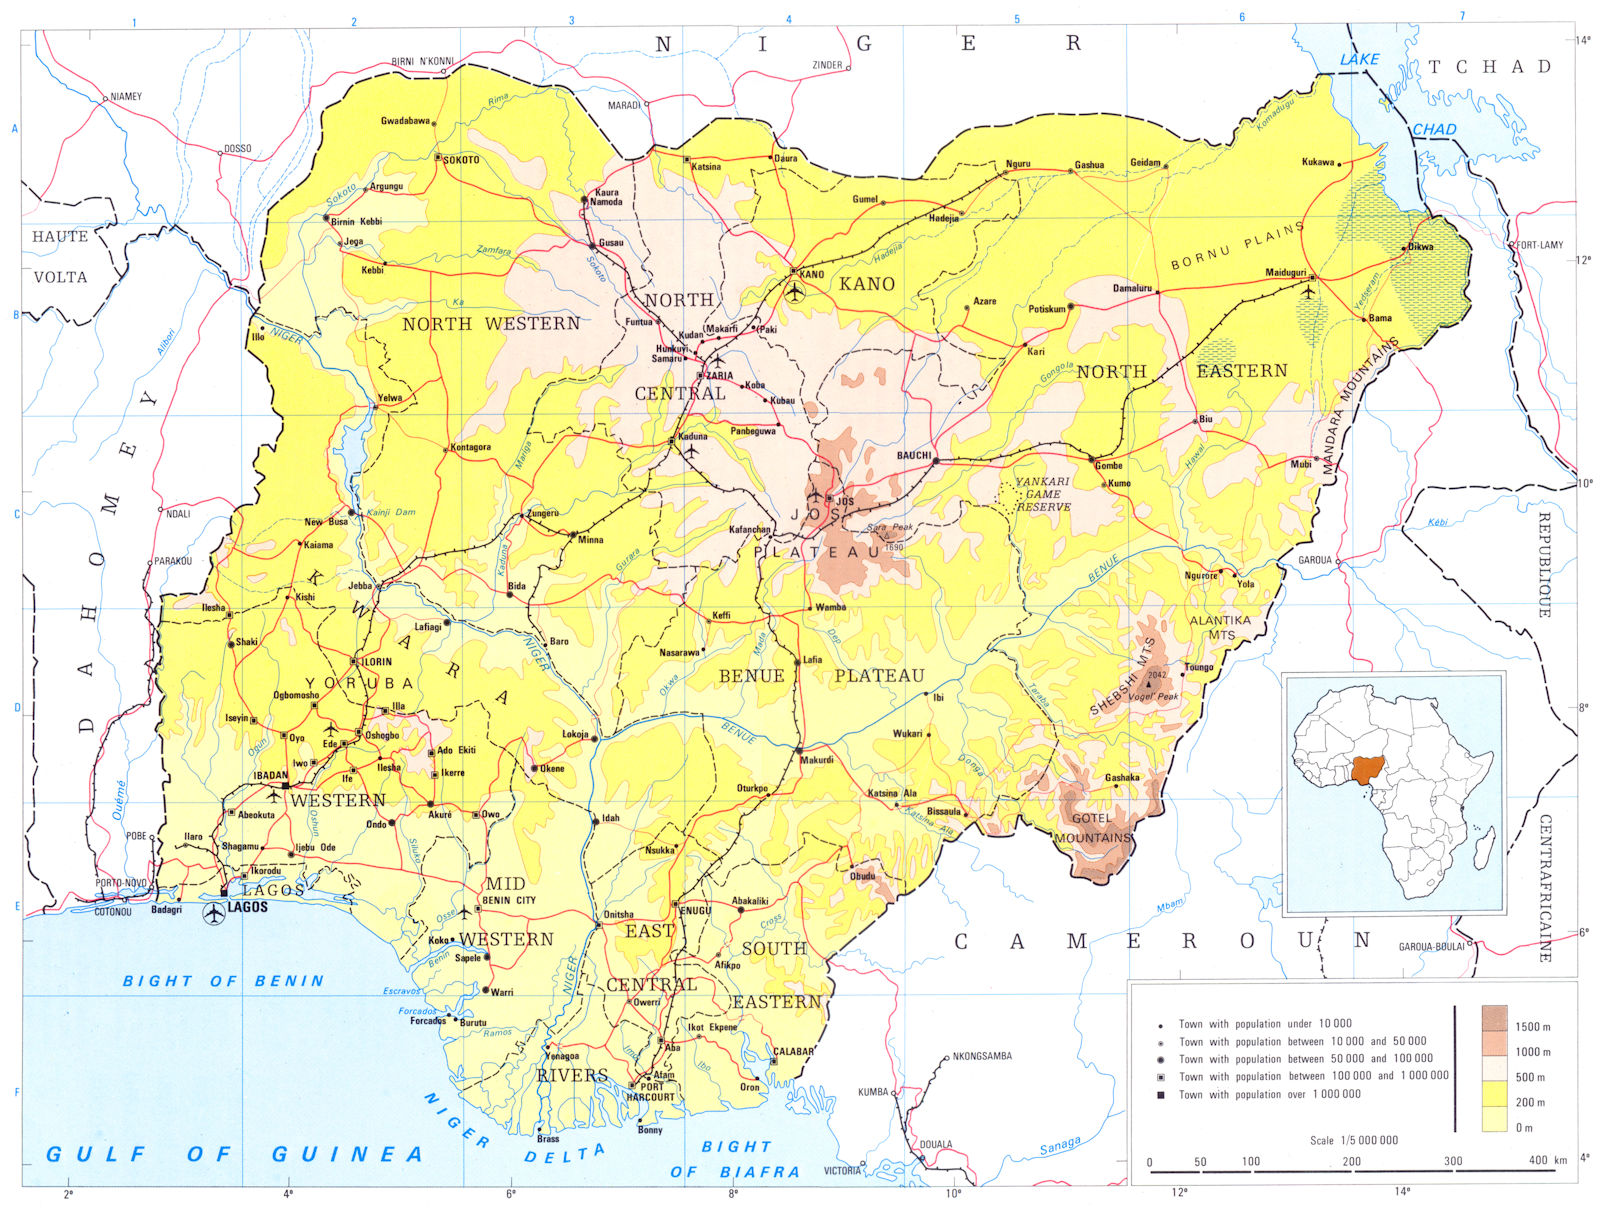 NIGERIA. Nigeria; Federal Republic of Nigeria 1973 old vintage map plan chart